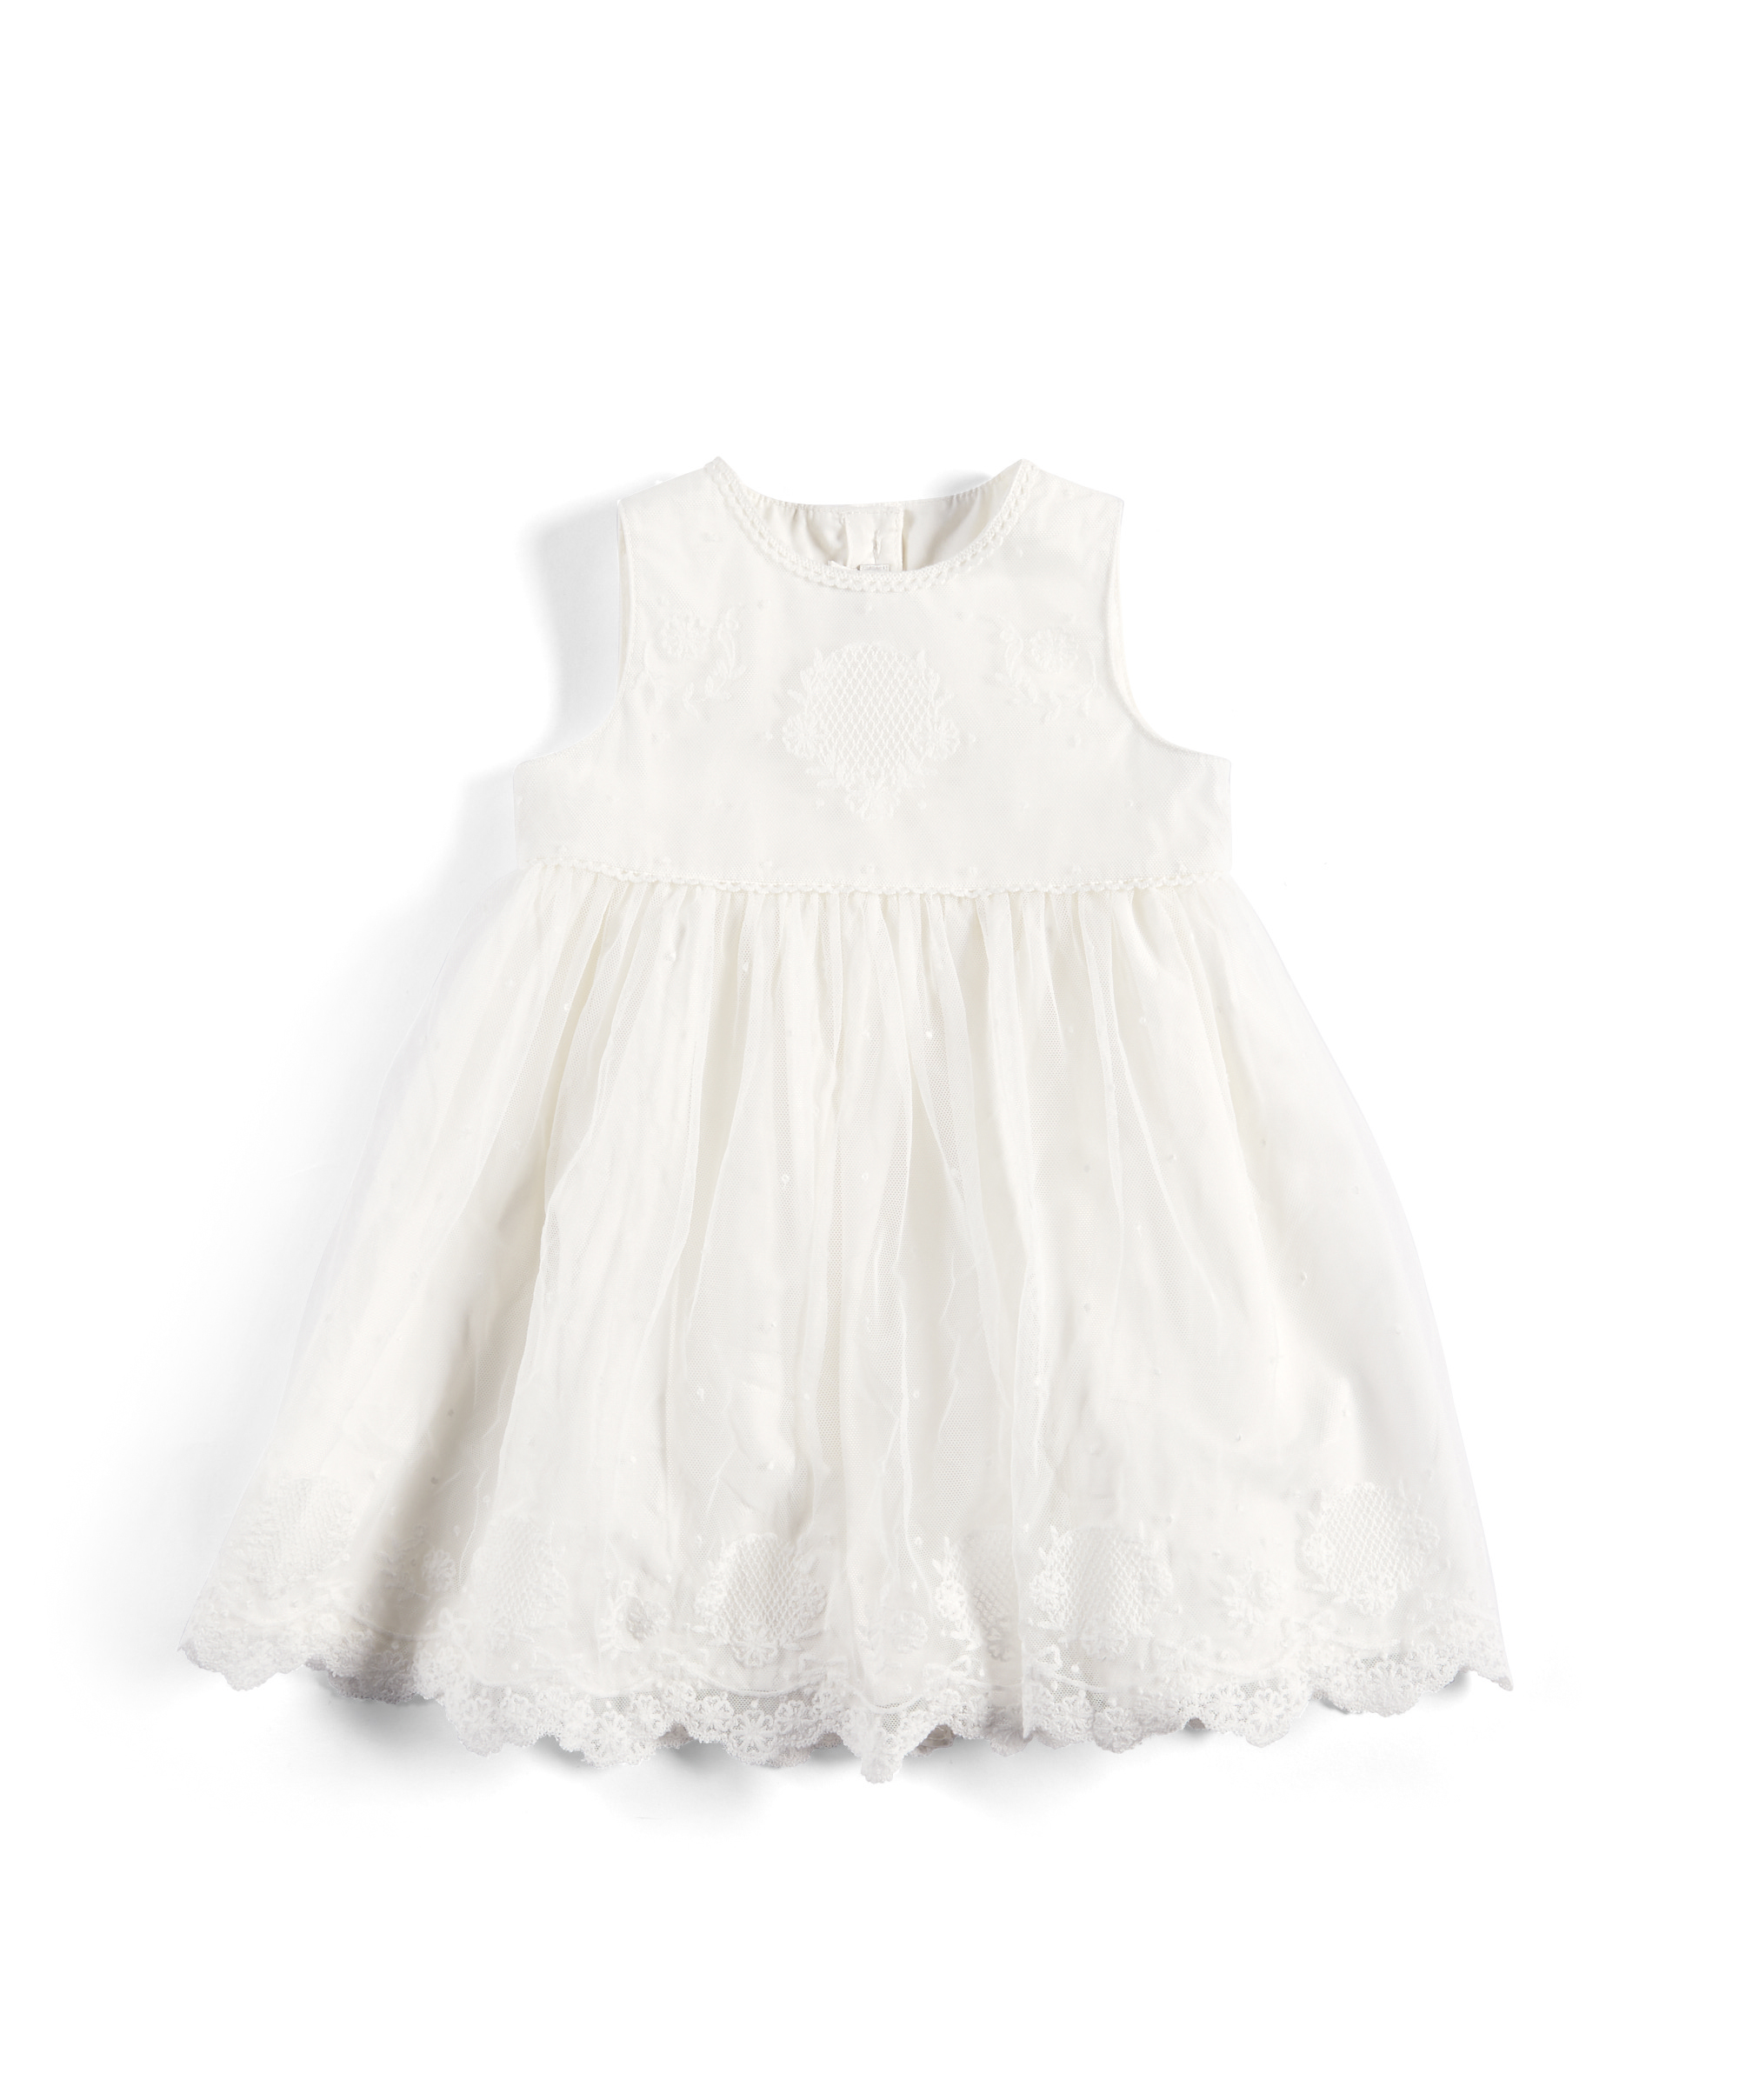 Buy Lace Dress - Baby Girl Dresses | Mamas & Papas UAE